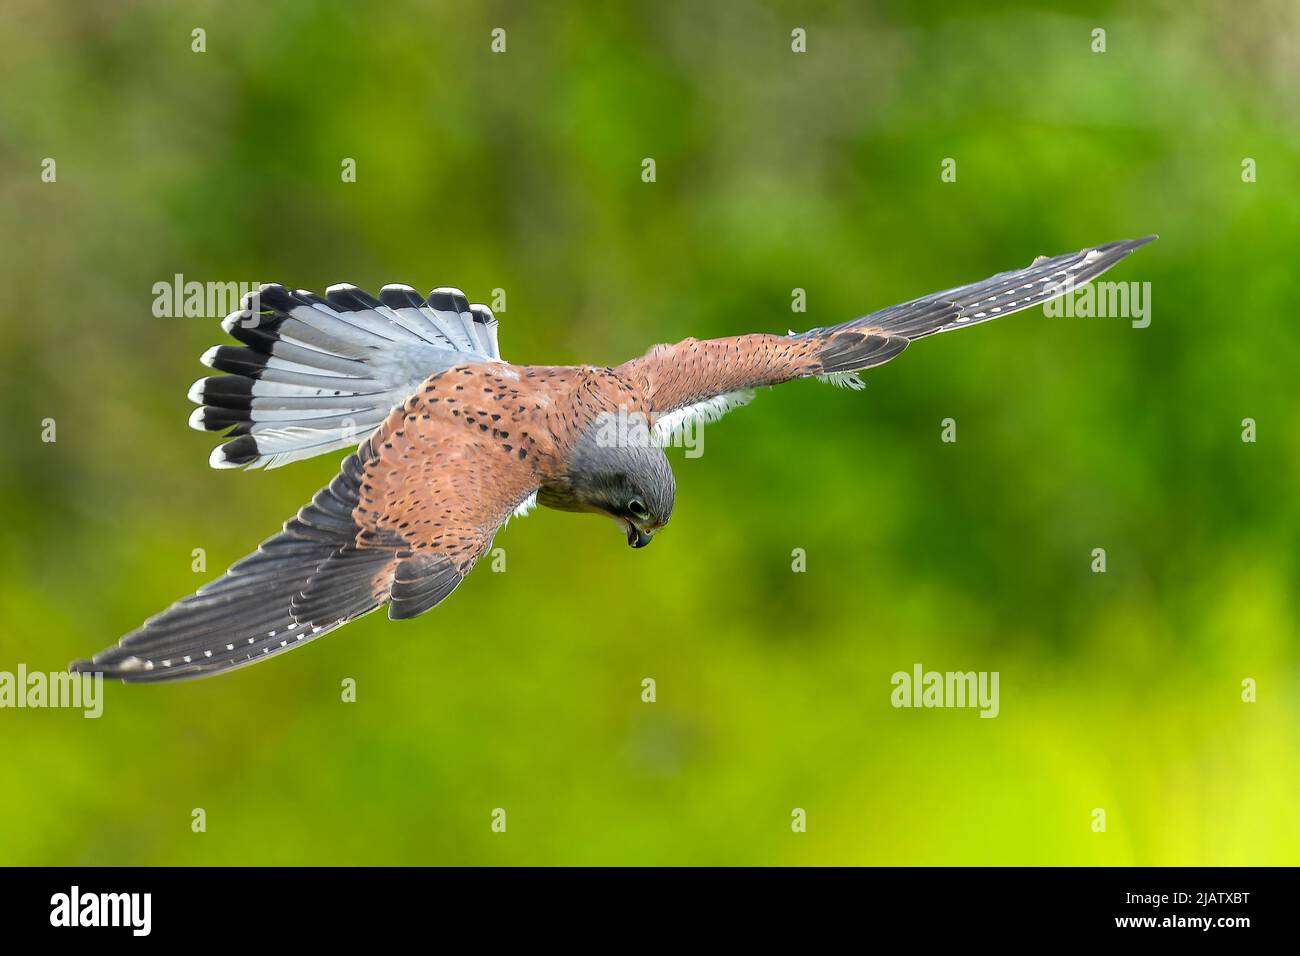 Kestrel (Falco tinnunculus) bird of prey flying low in flight, stock photo image Stock Photo